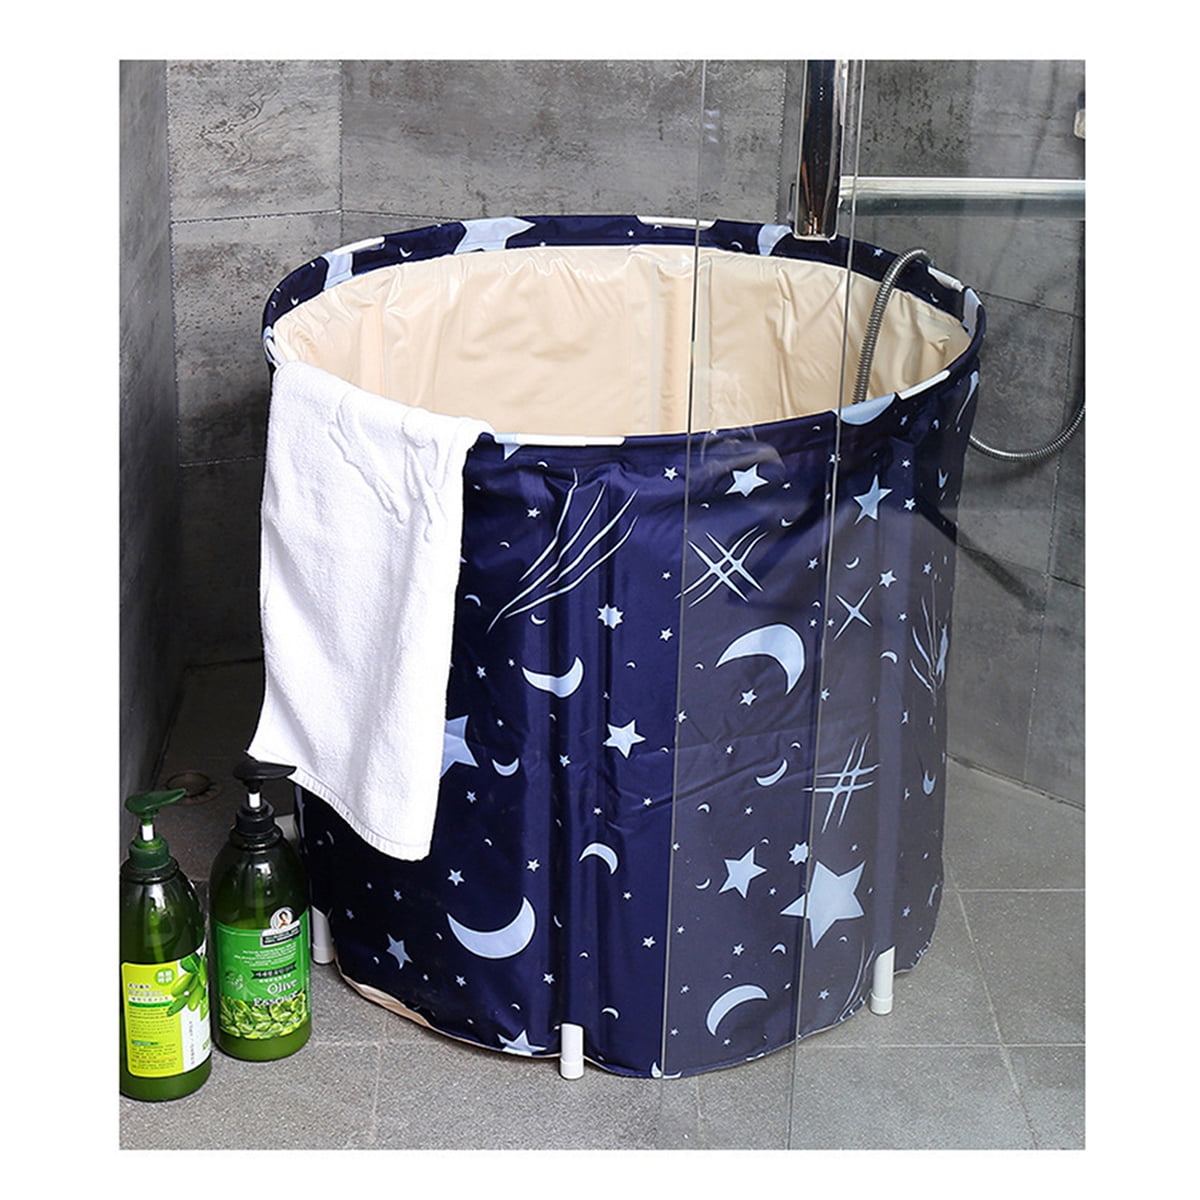 65cm Adult Portable Folding Bathtub PVC Water Tub Outdoor Room Spa Bath